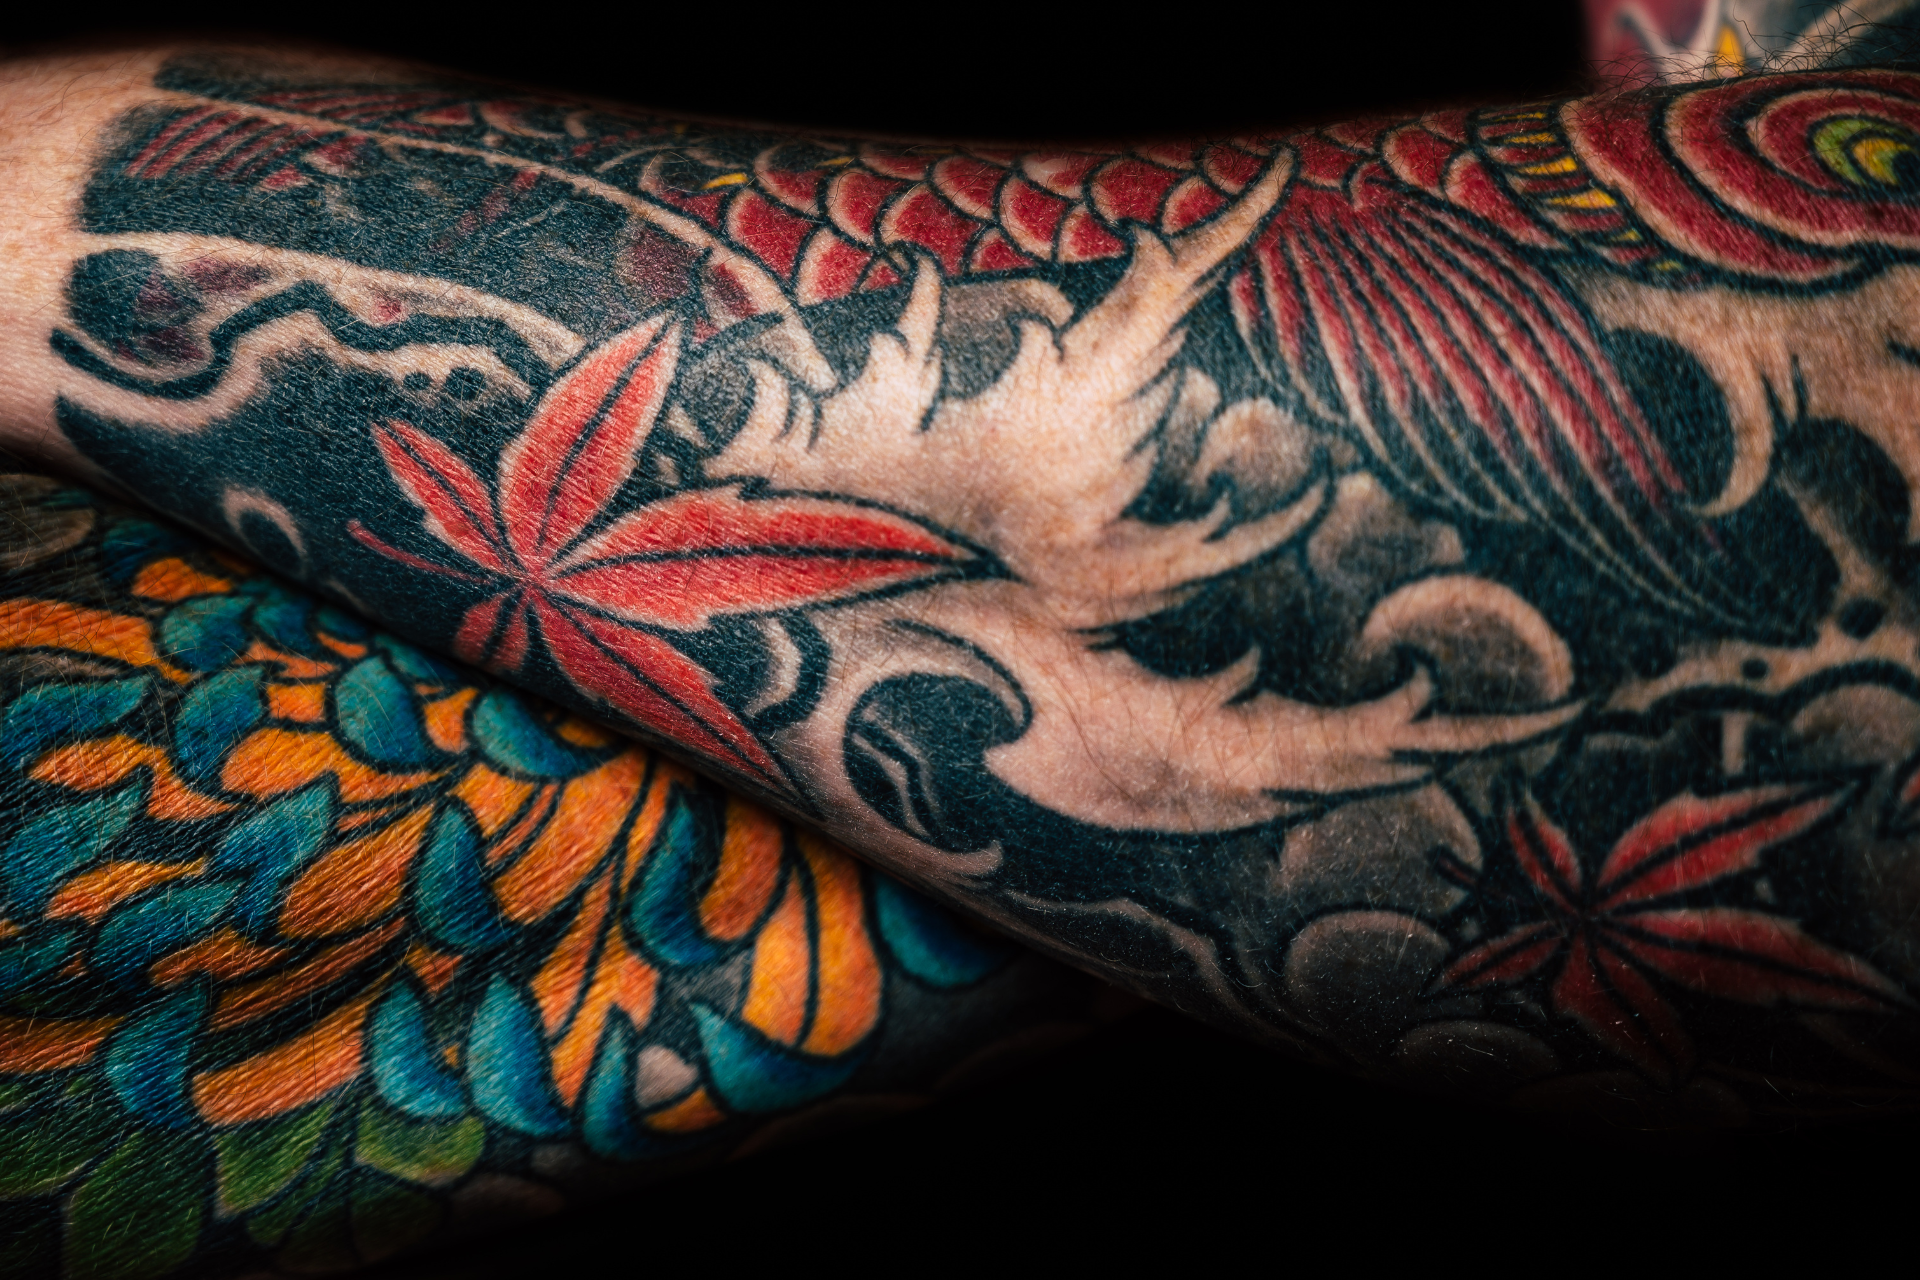 tattooed arms folded